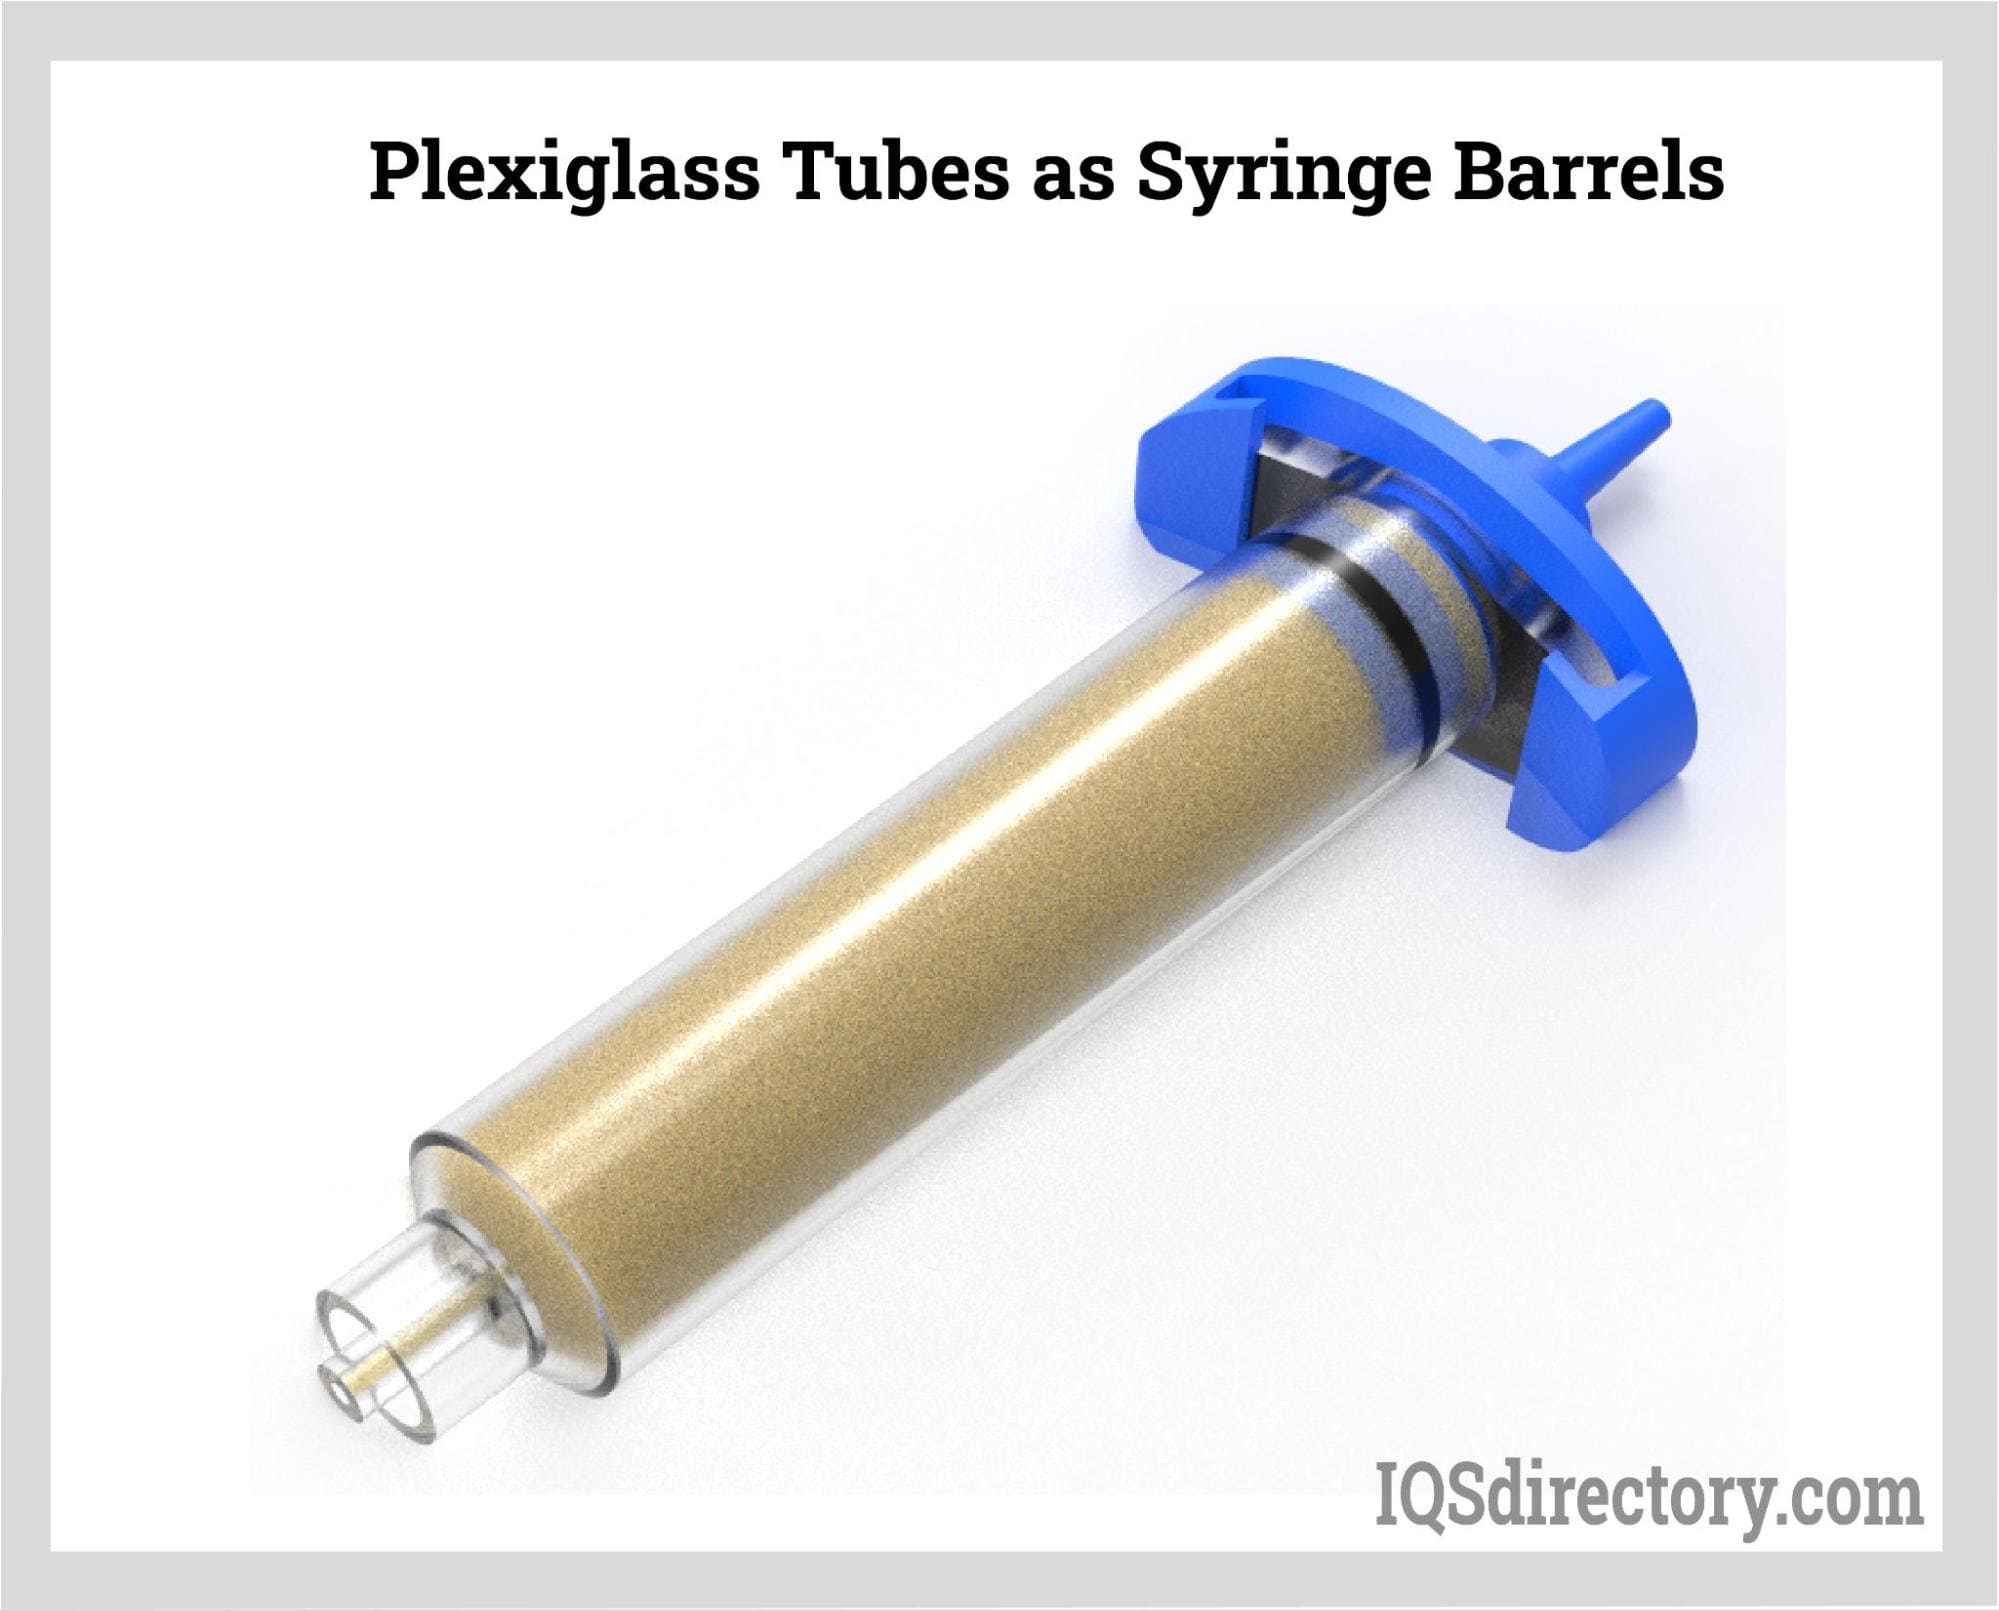 Plexiglass Tubes as Syringe Barrels